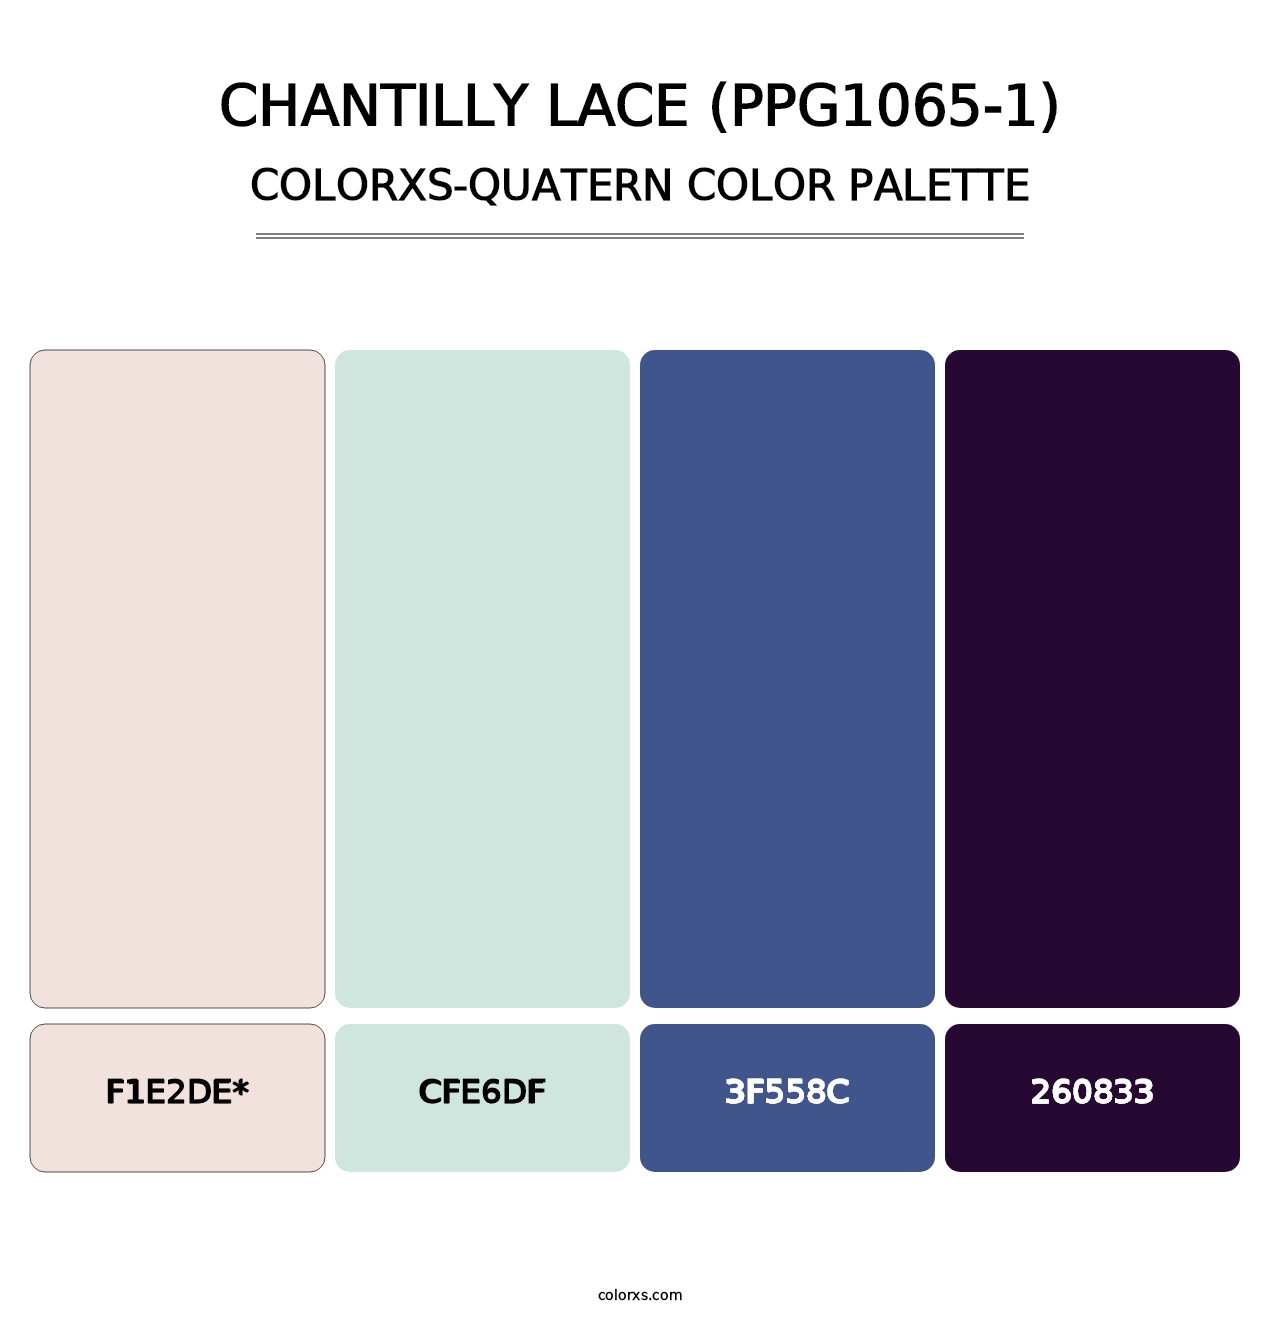 Chantilly Lace (PPG1065-1) - Colorxs Quatern Palette